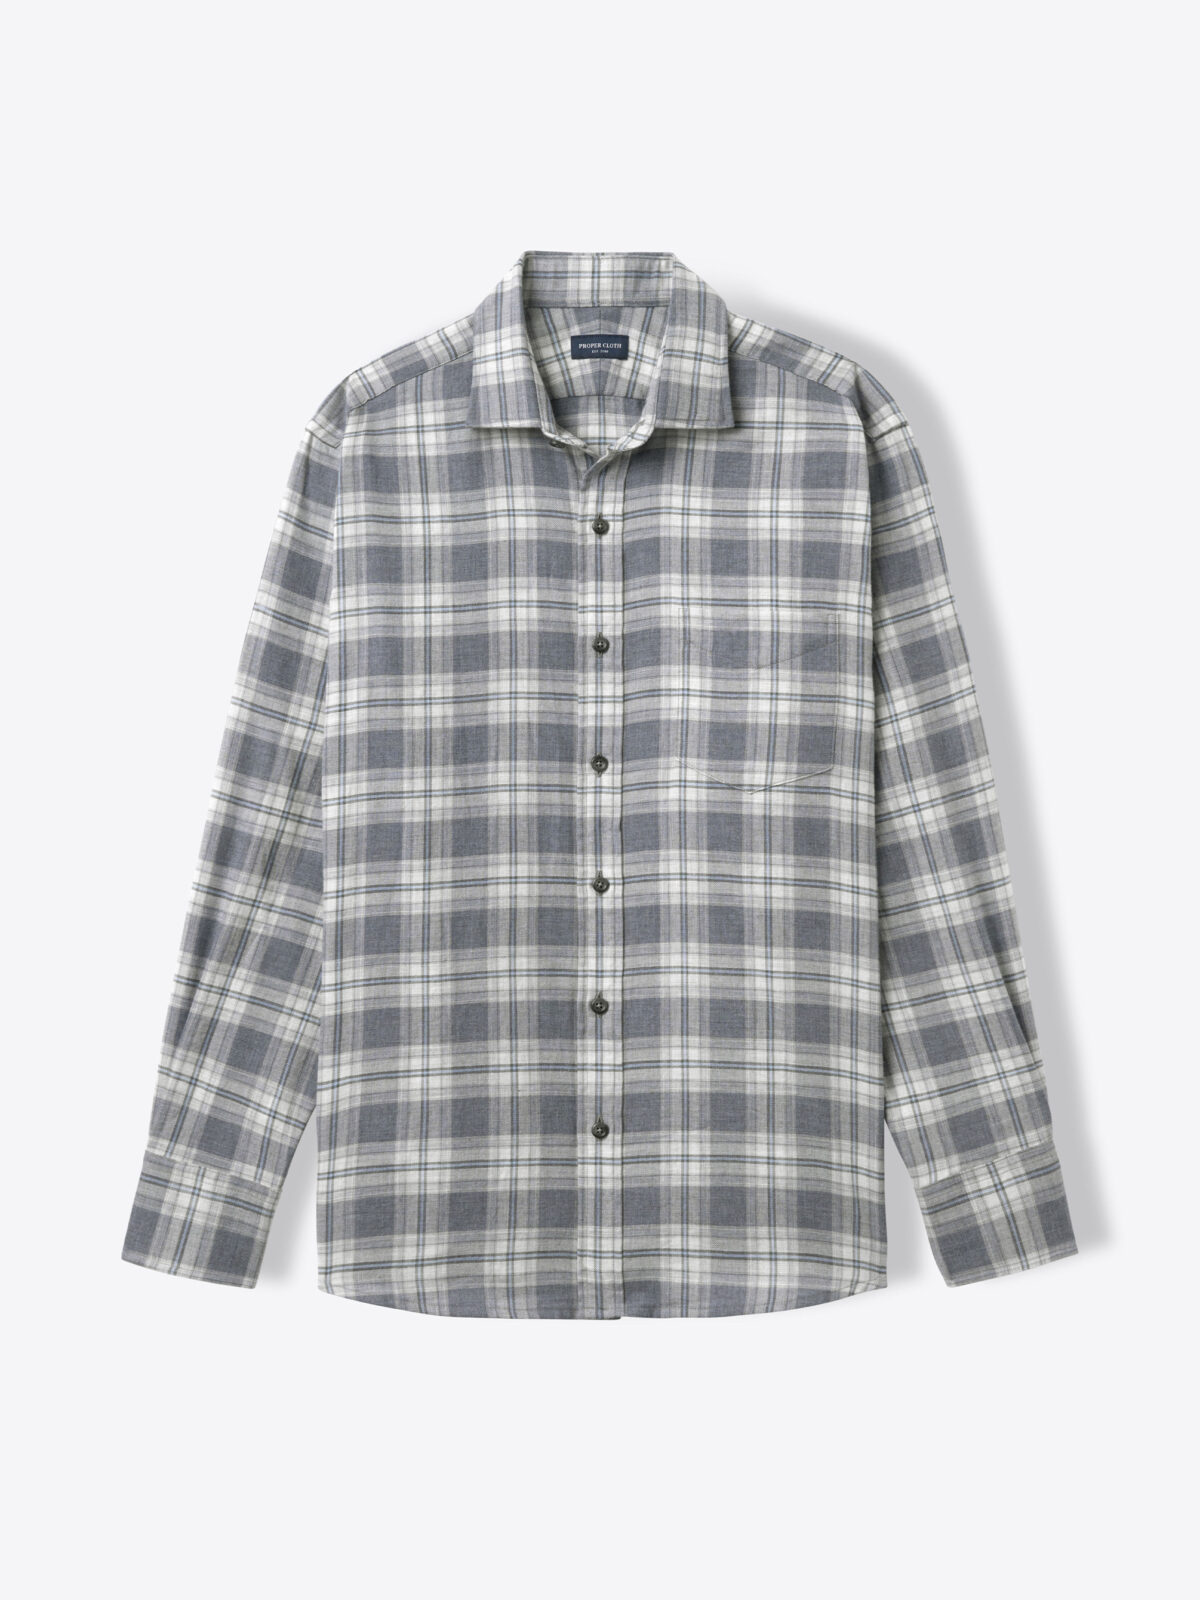 Satoyama Charcoal and Sky Plaid Flannel Shirt by Proper Cloth